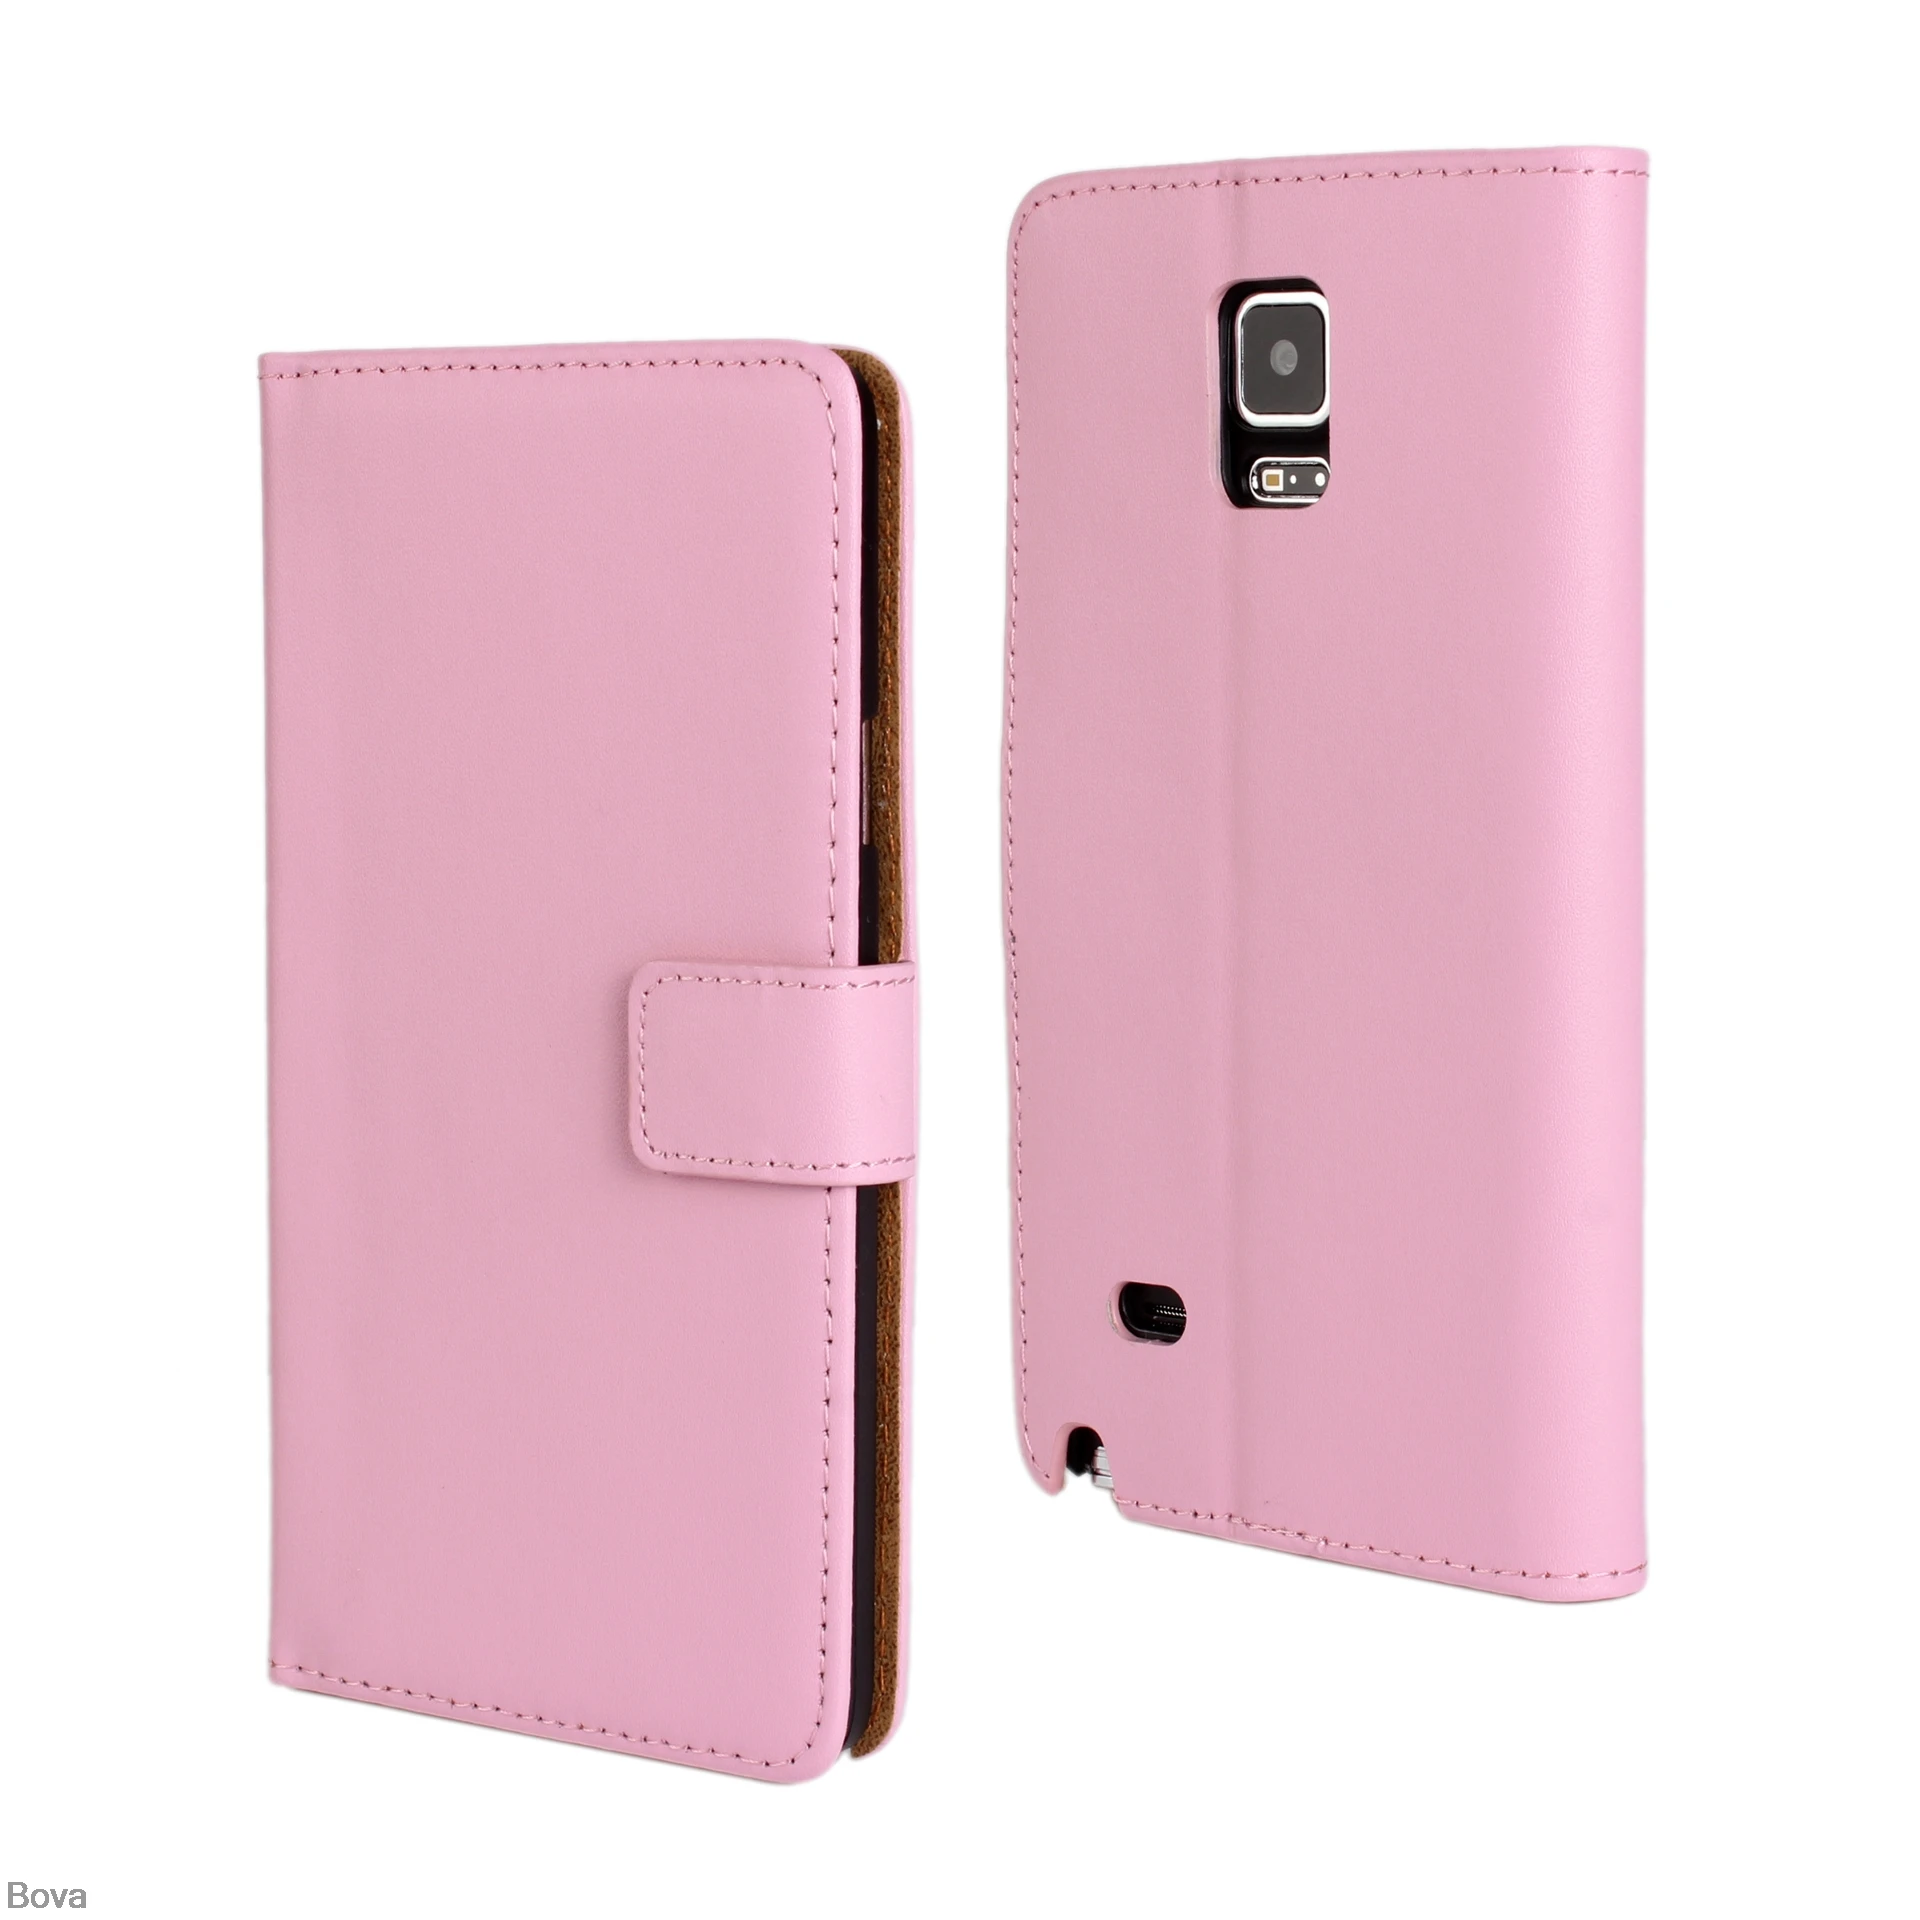 Кожаный чехол-кошелек для samsung Galaxy Note 4, чехол, роскошный флип-чехол для Note 4 Note 4, N9100, N910F, держатель для карт, кобура GG